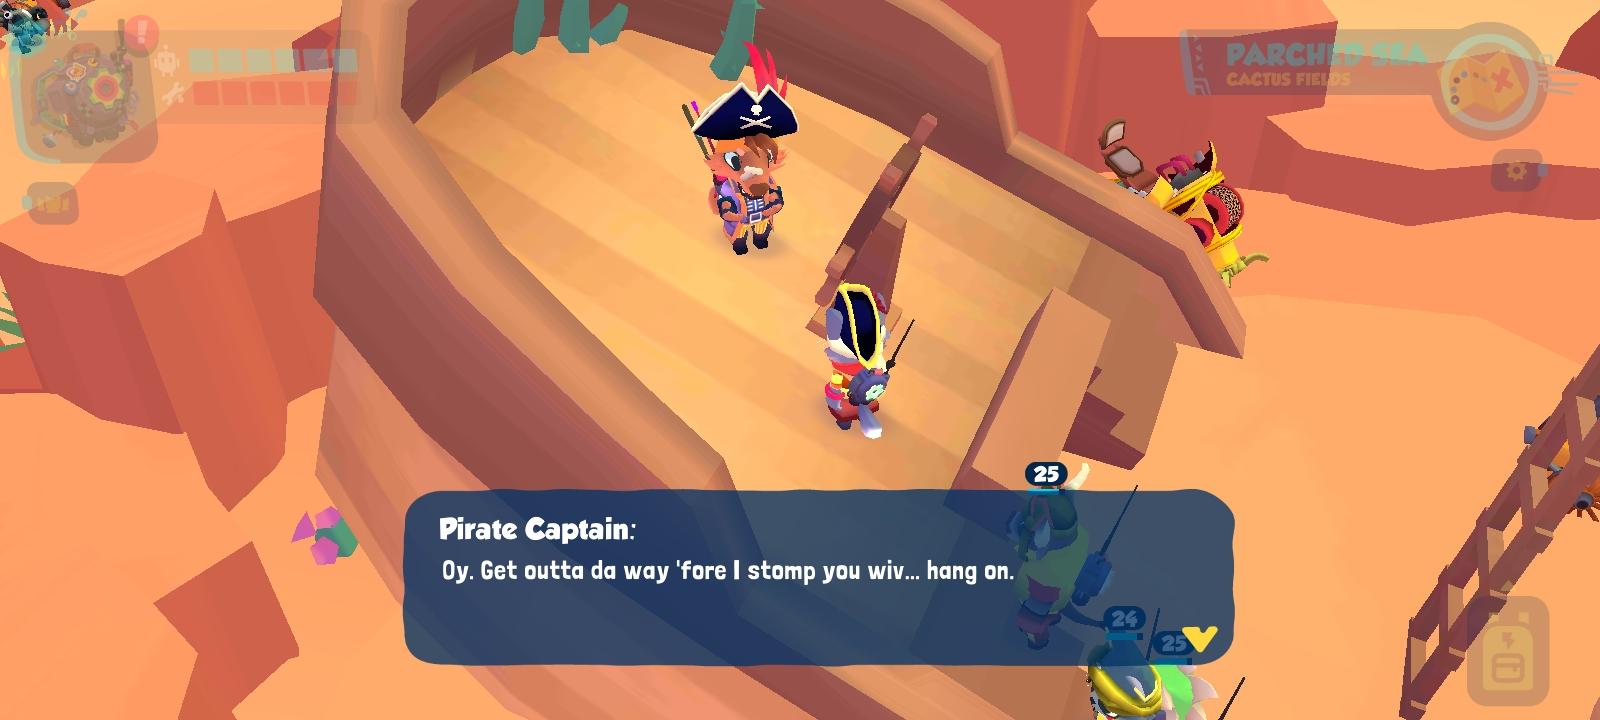 Pirate Captain NPC